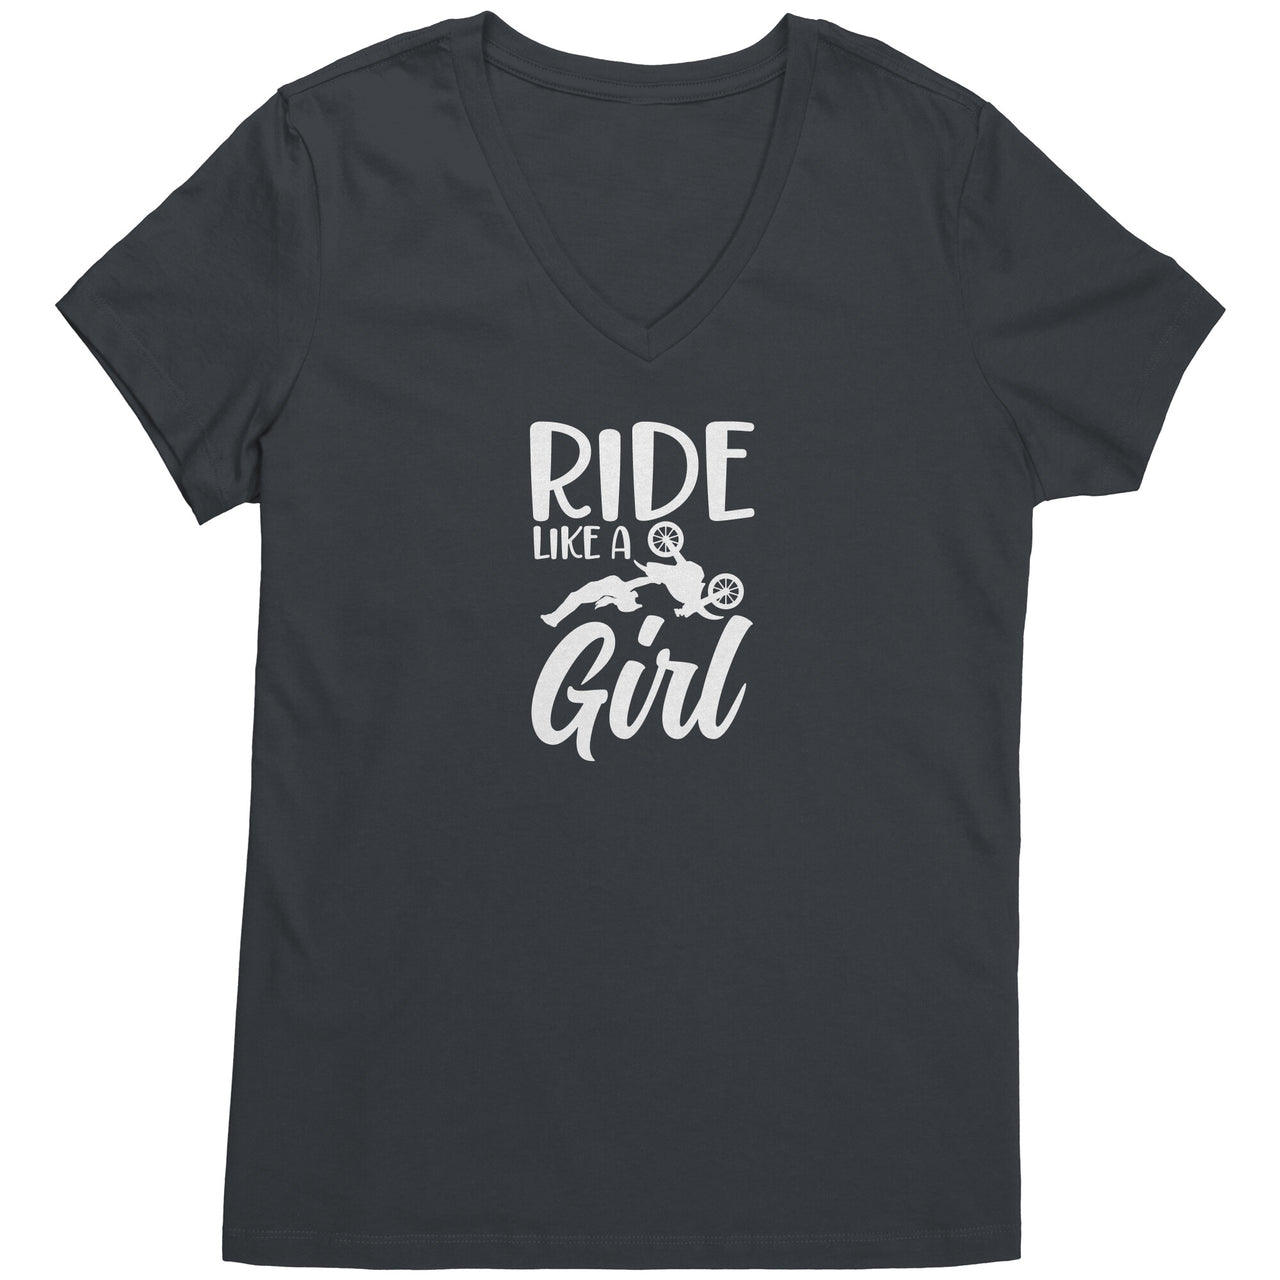 Dirt bike Girl T-Shirts